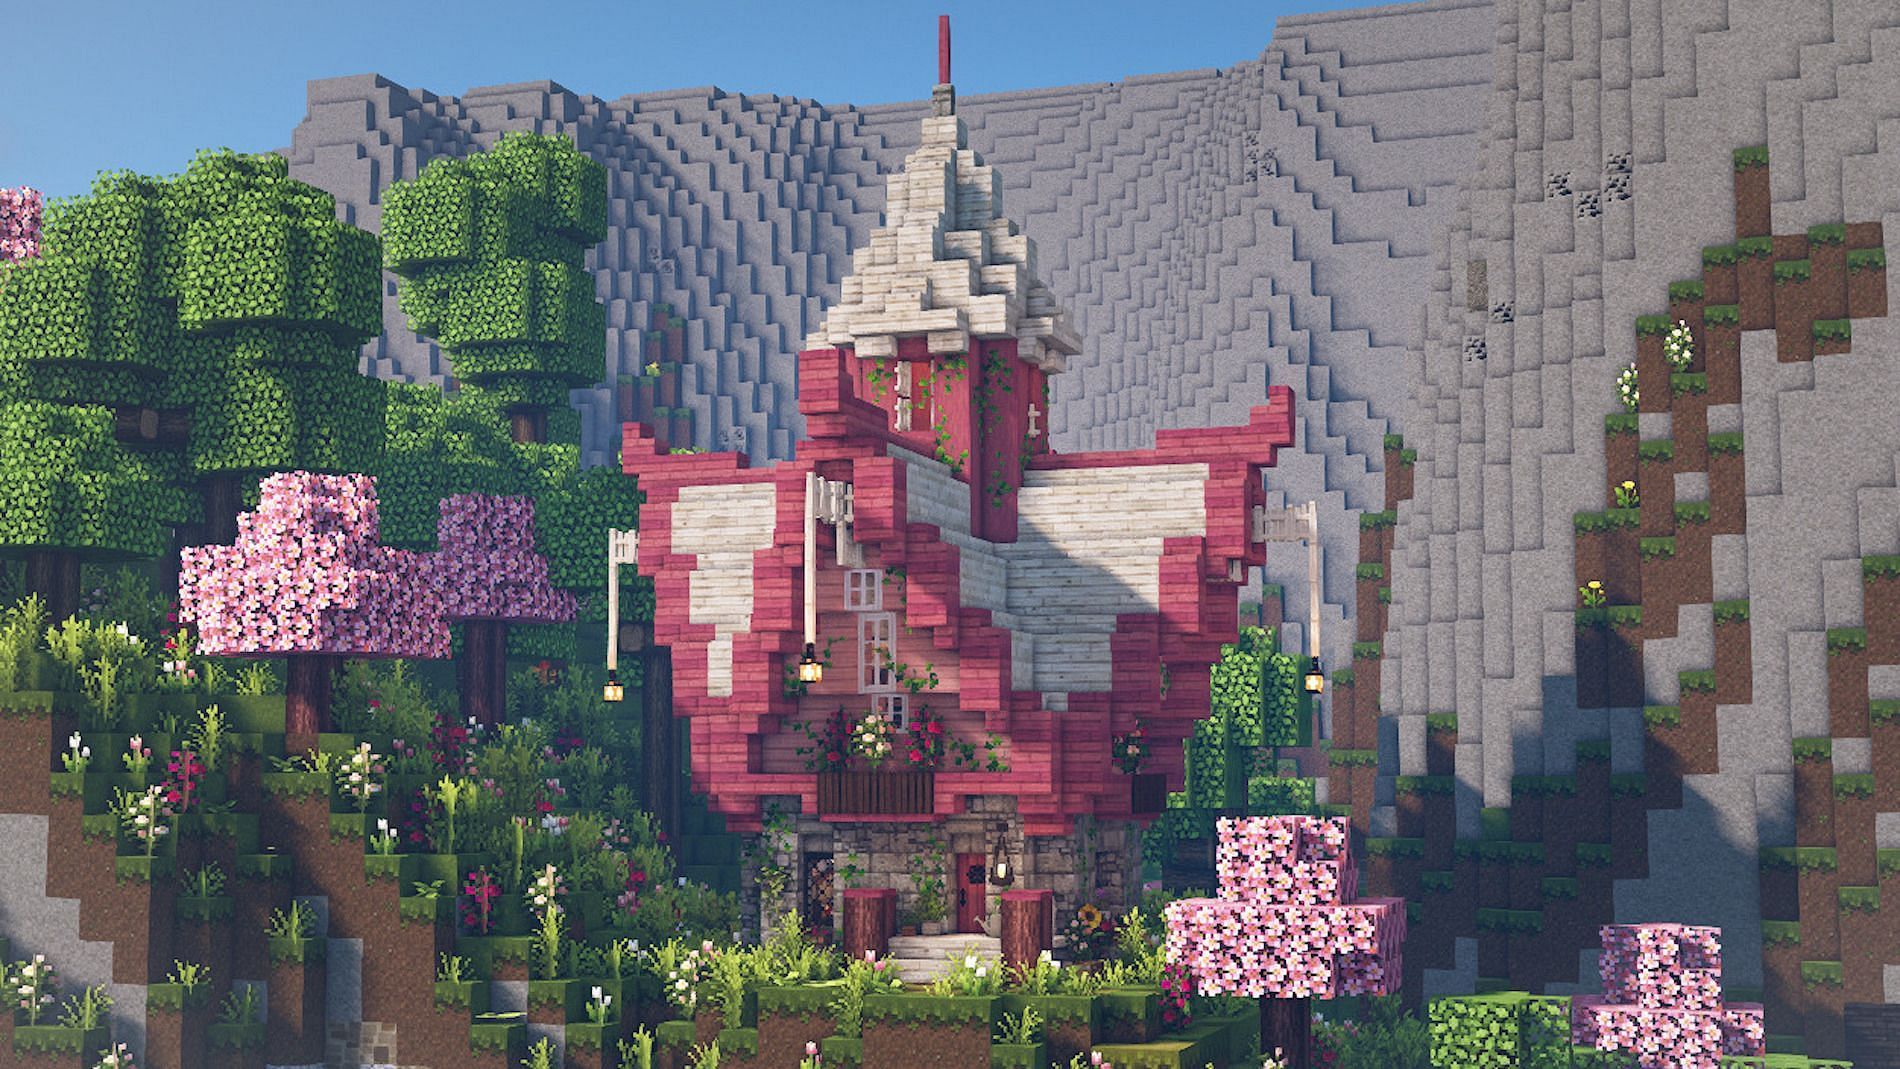 Pink fairytale house design [Image via beeswithmoss on Tumblr]